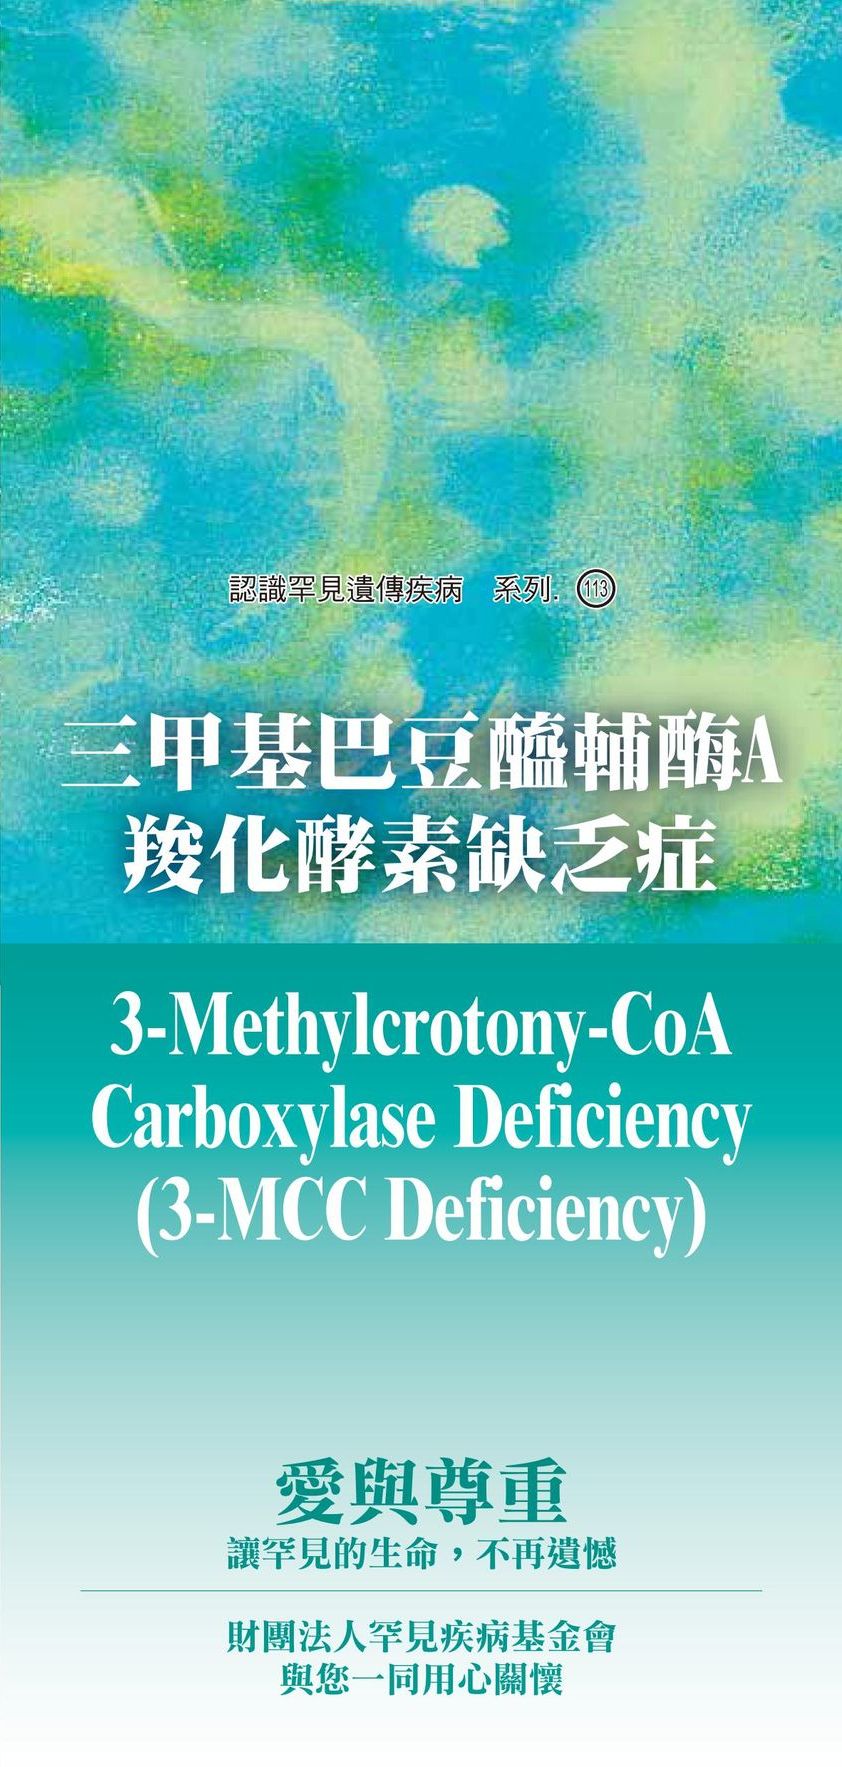 三甲基巴豆醯輔?A羧化酵素缺乏症  ( 3-Methylcrotony-CoA Carboxylase Deficiency, 3-MCC Deficiency )